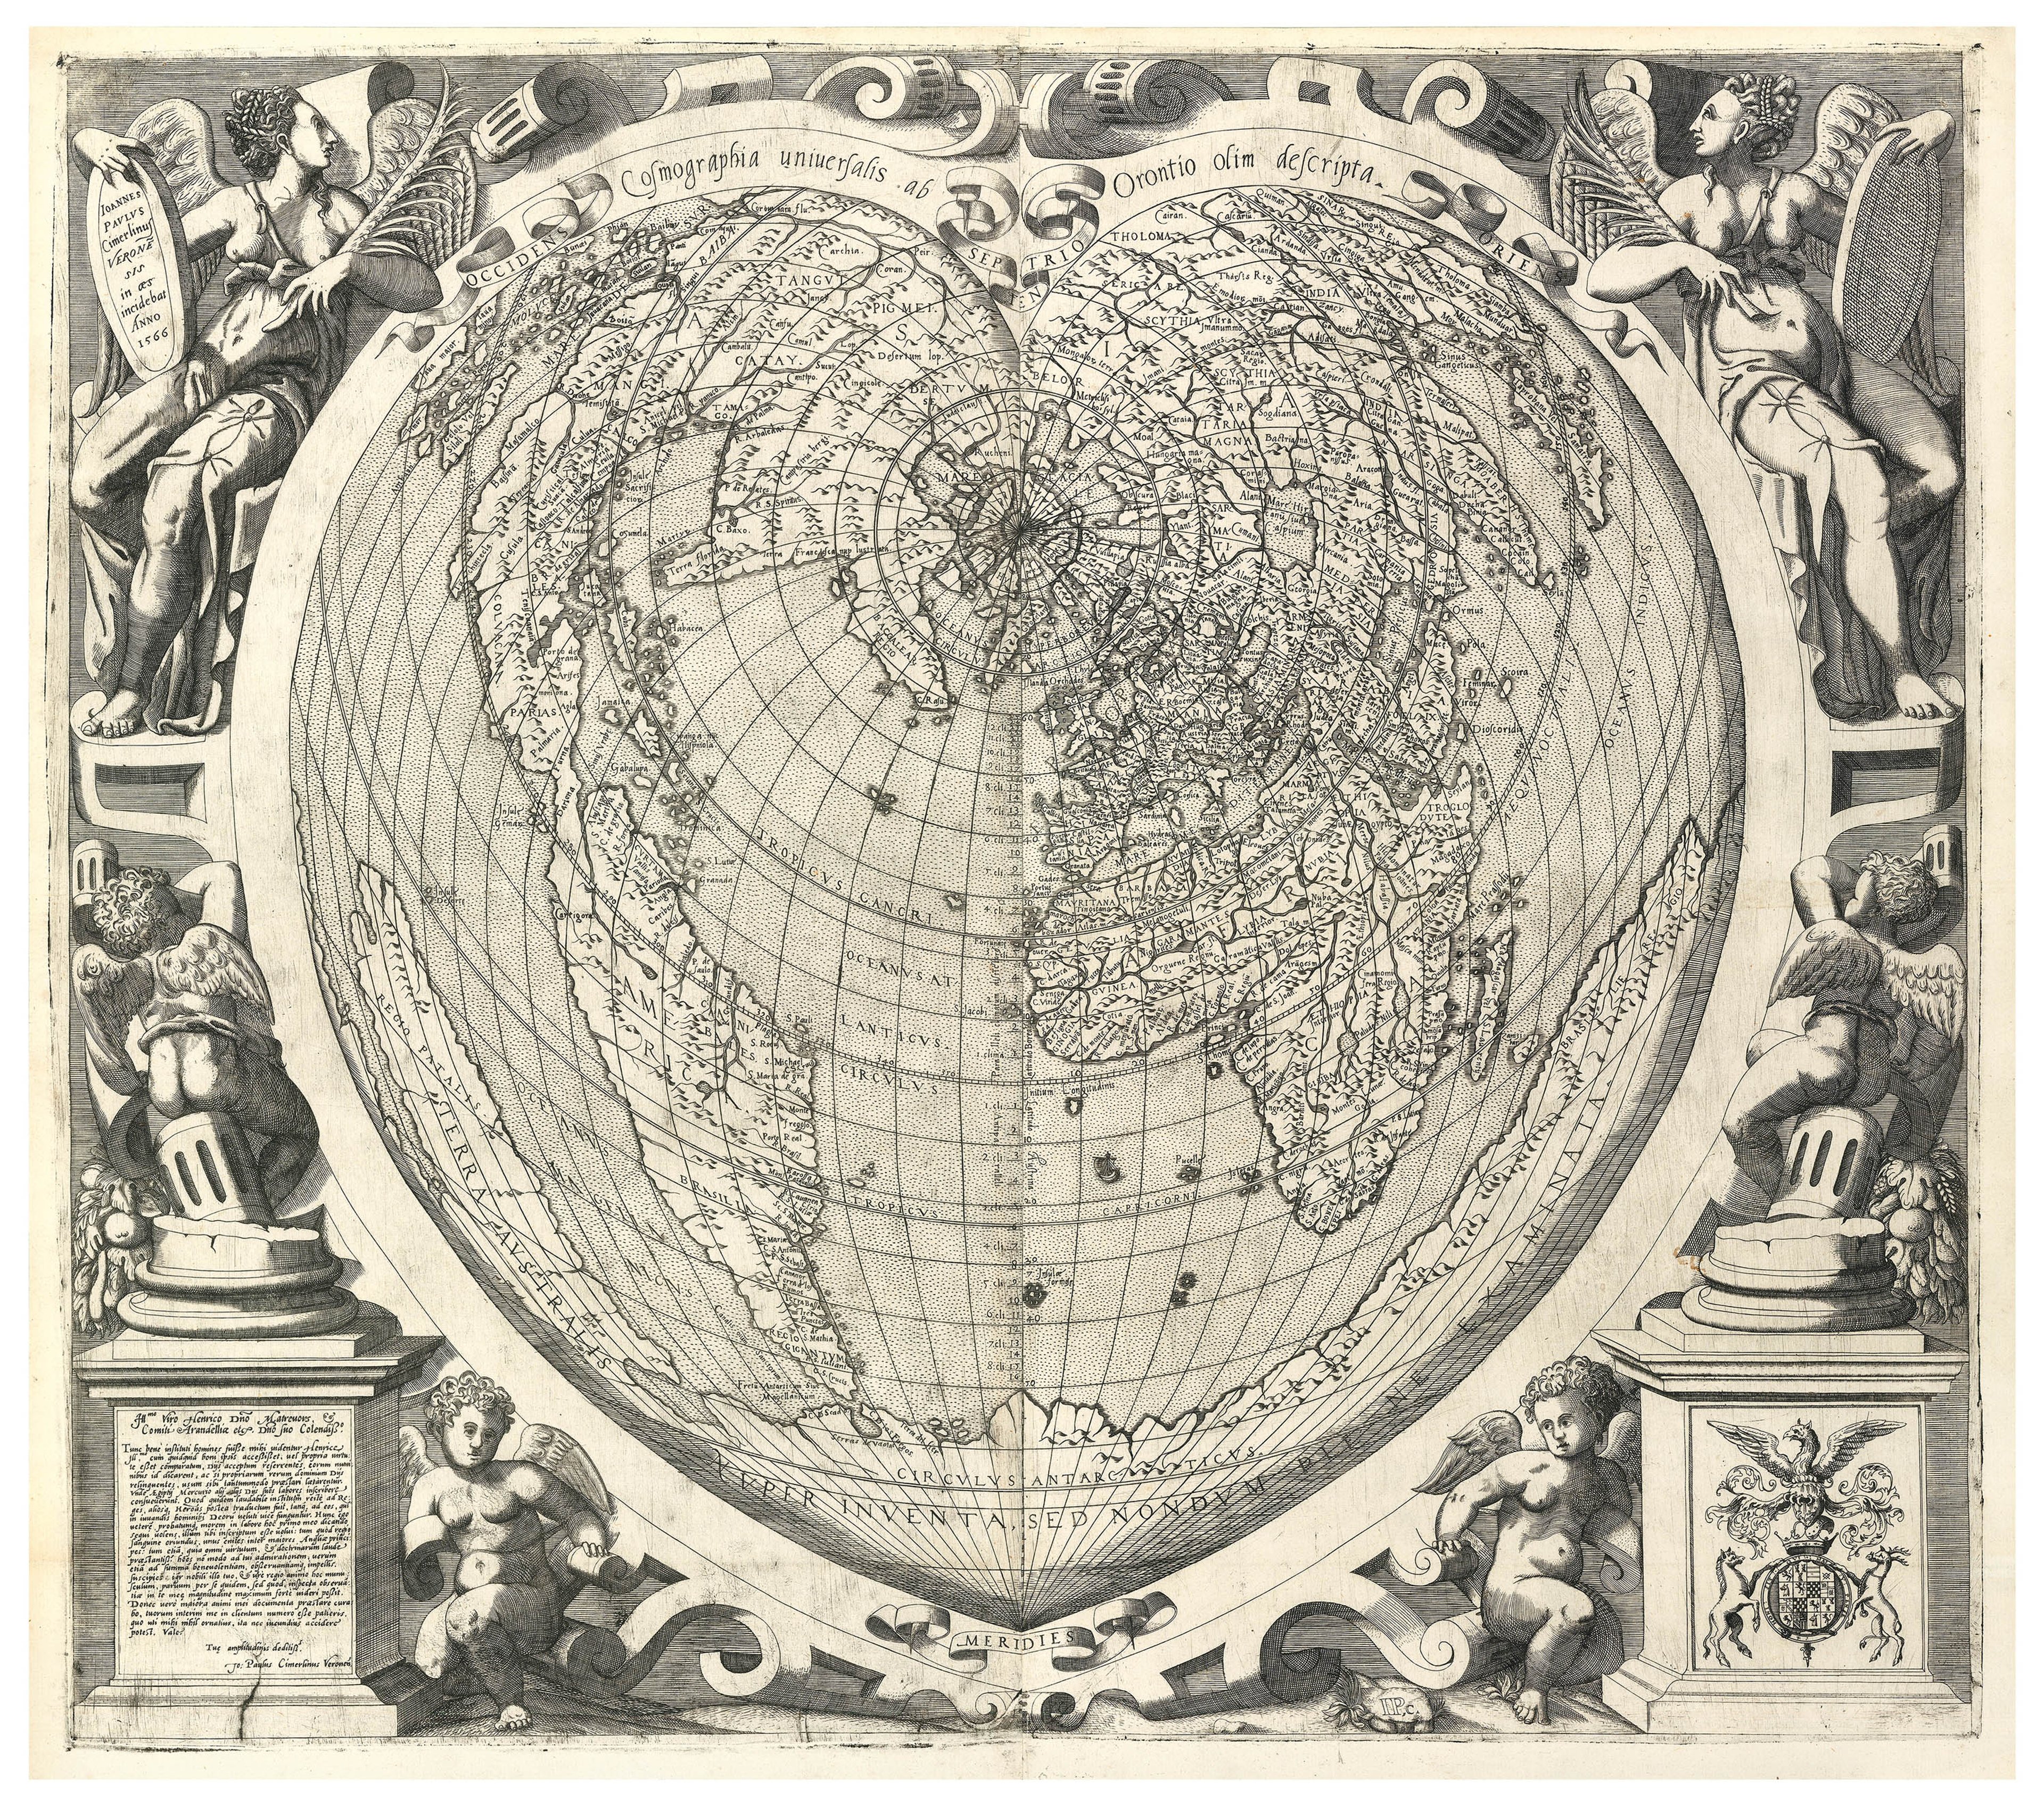 Giovanni Cimerlino, Cosmographia universalis ab Orontio olim descripta, 1566